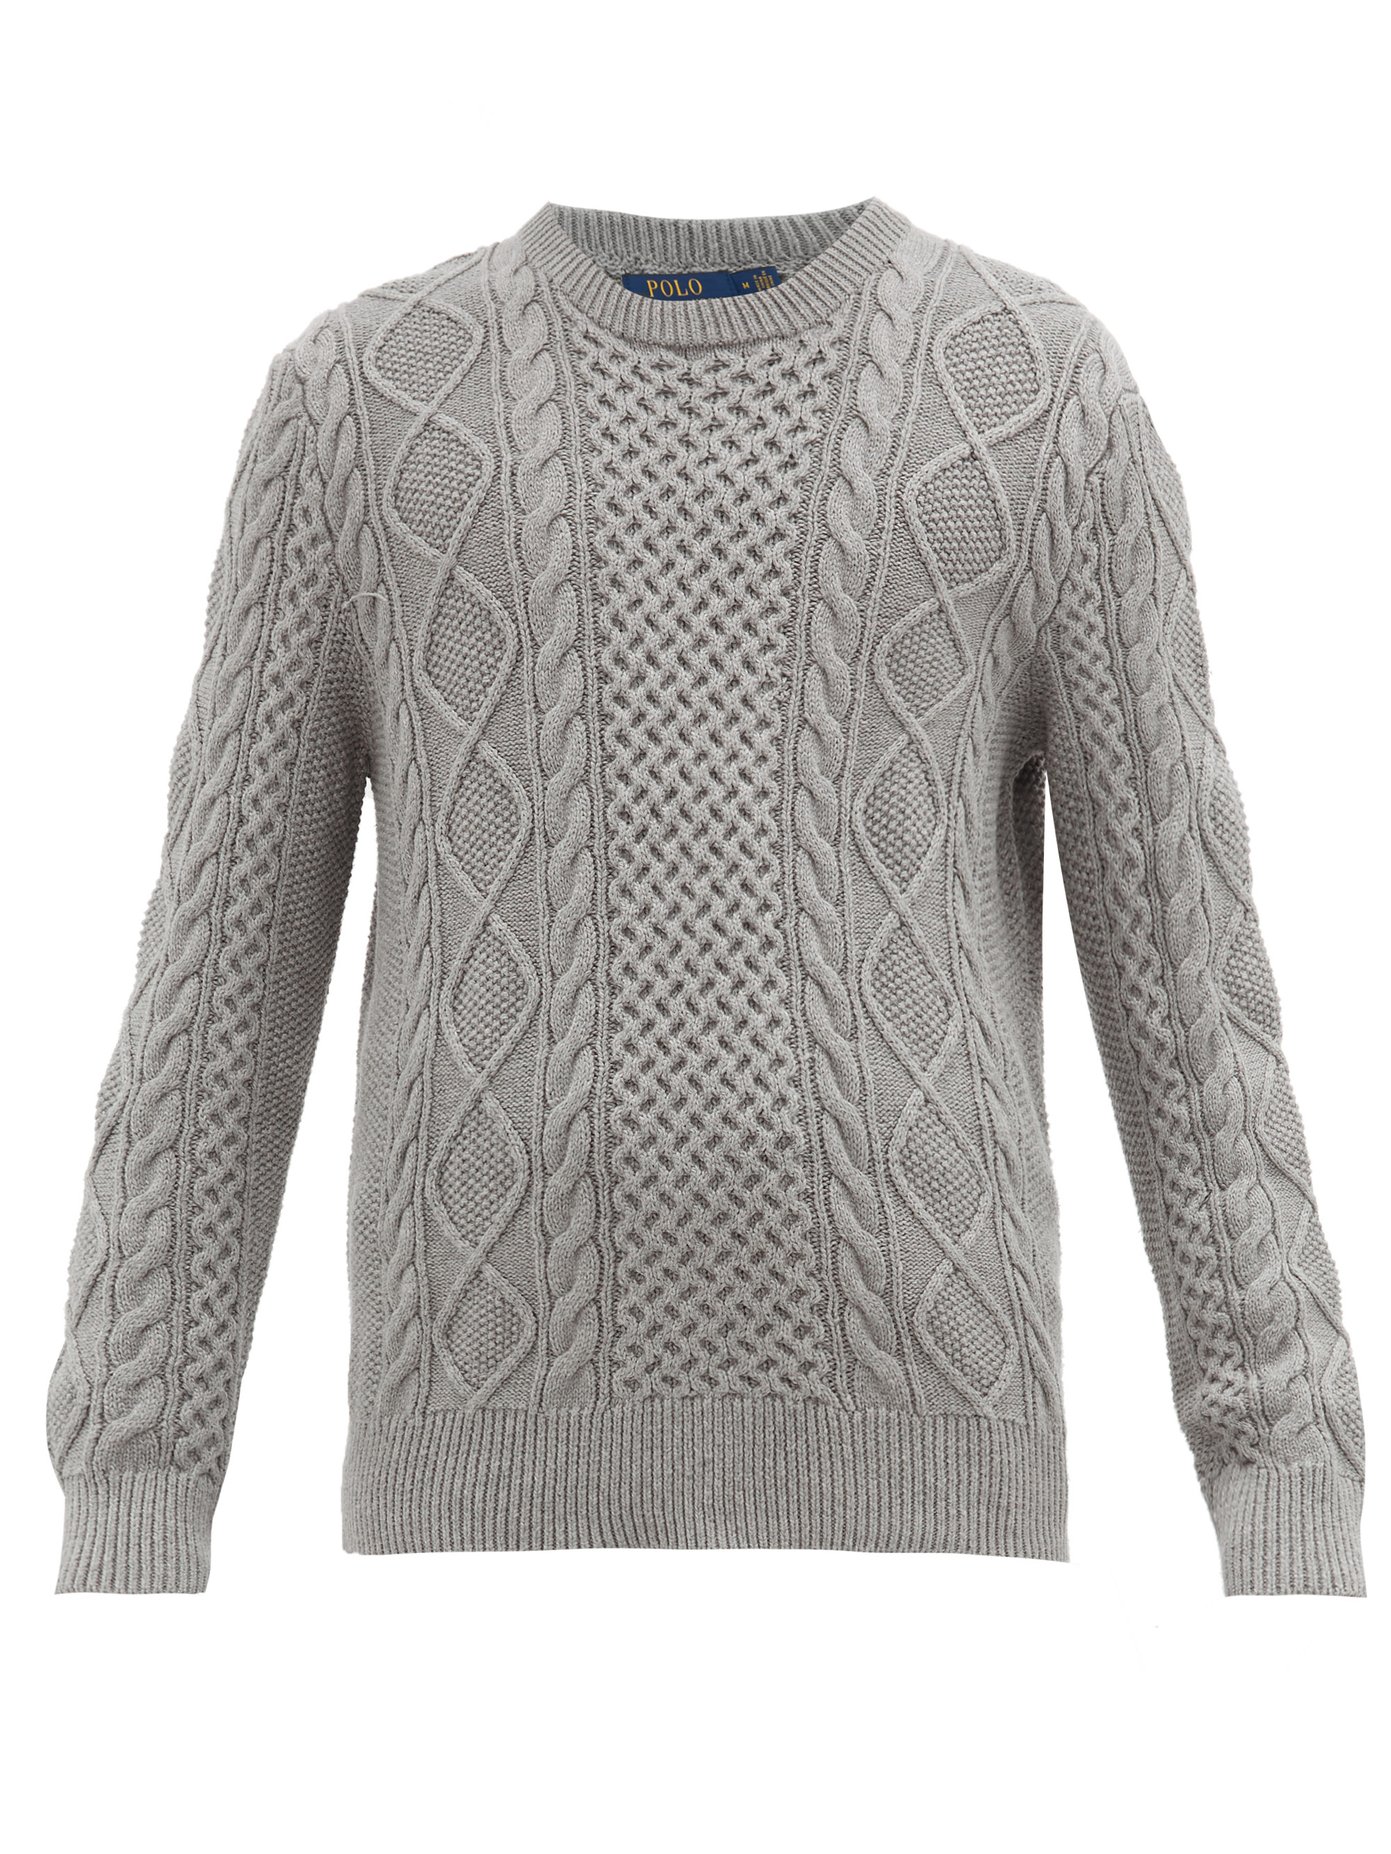 ralph lauren cable knit jumper grey